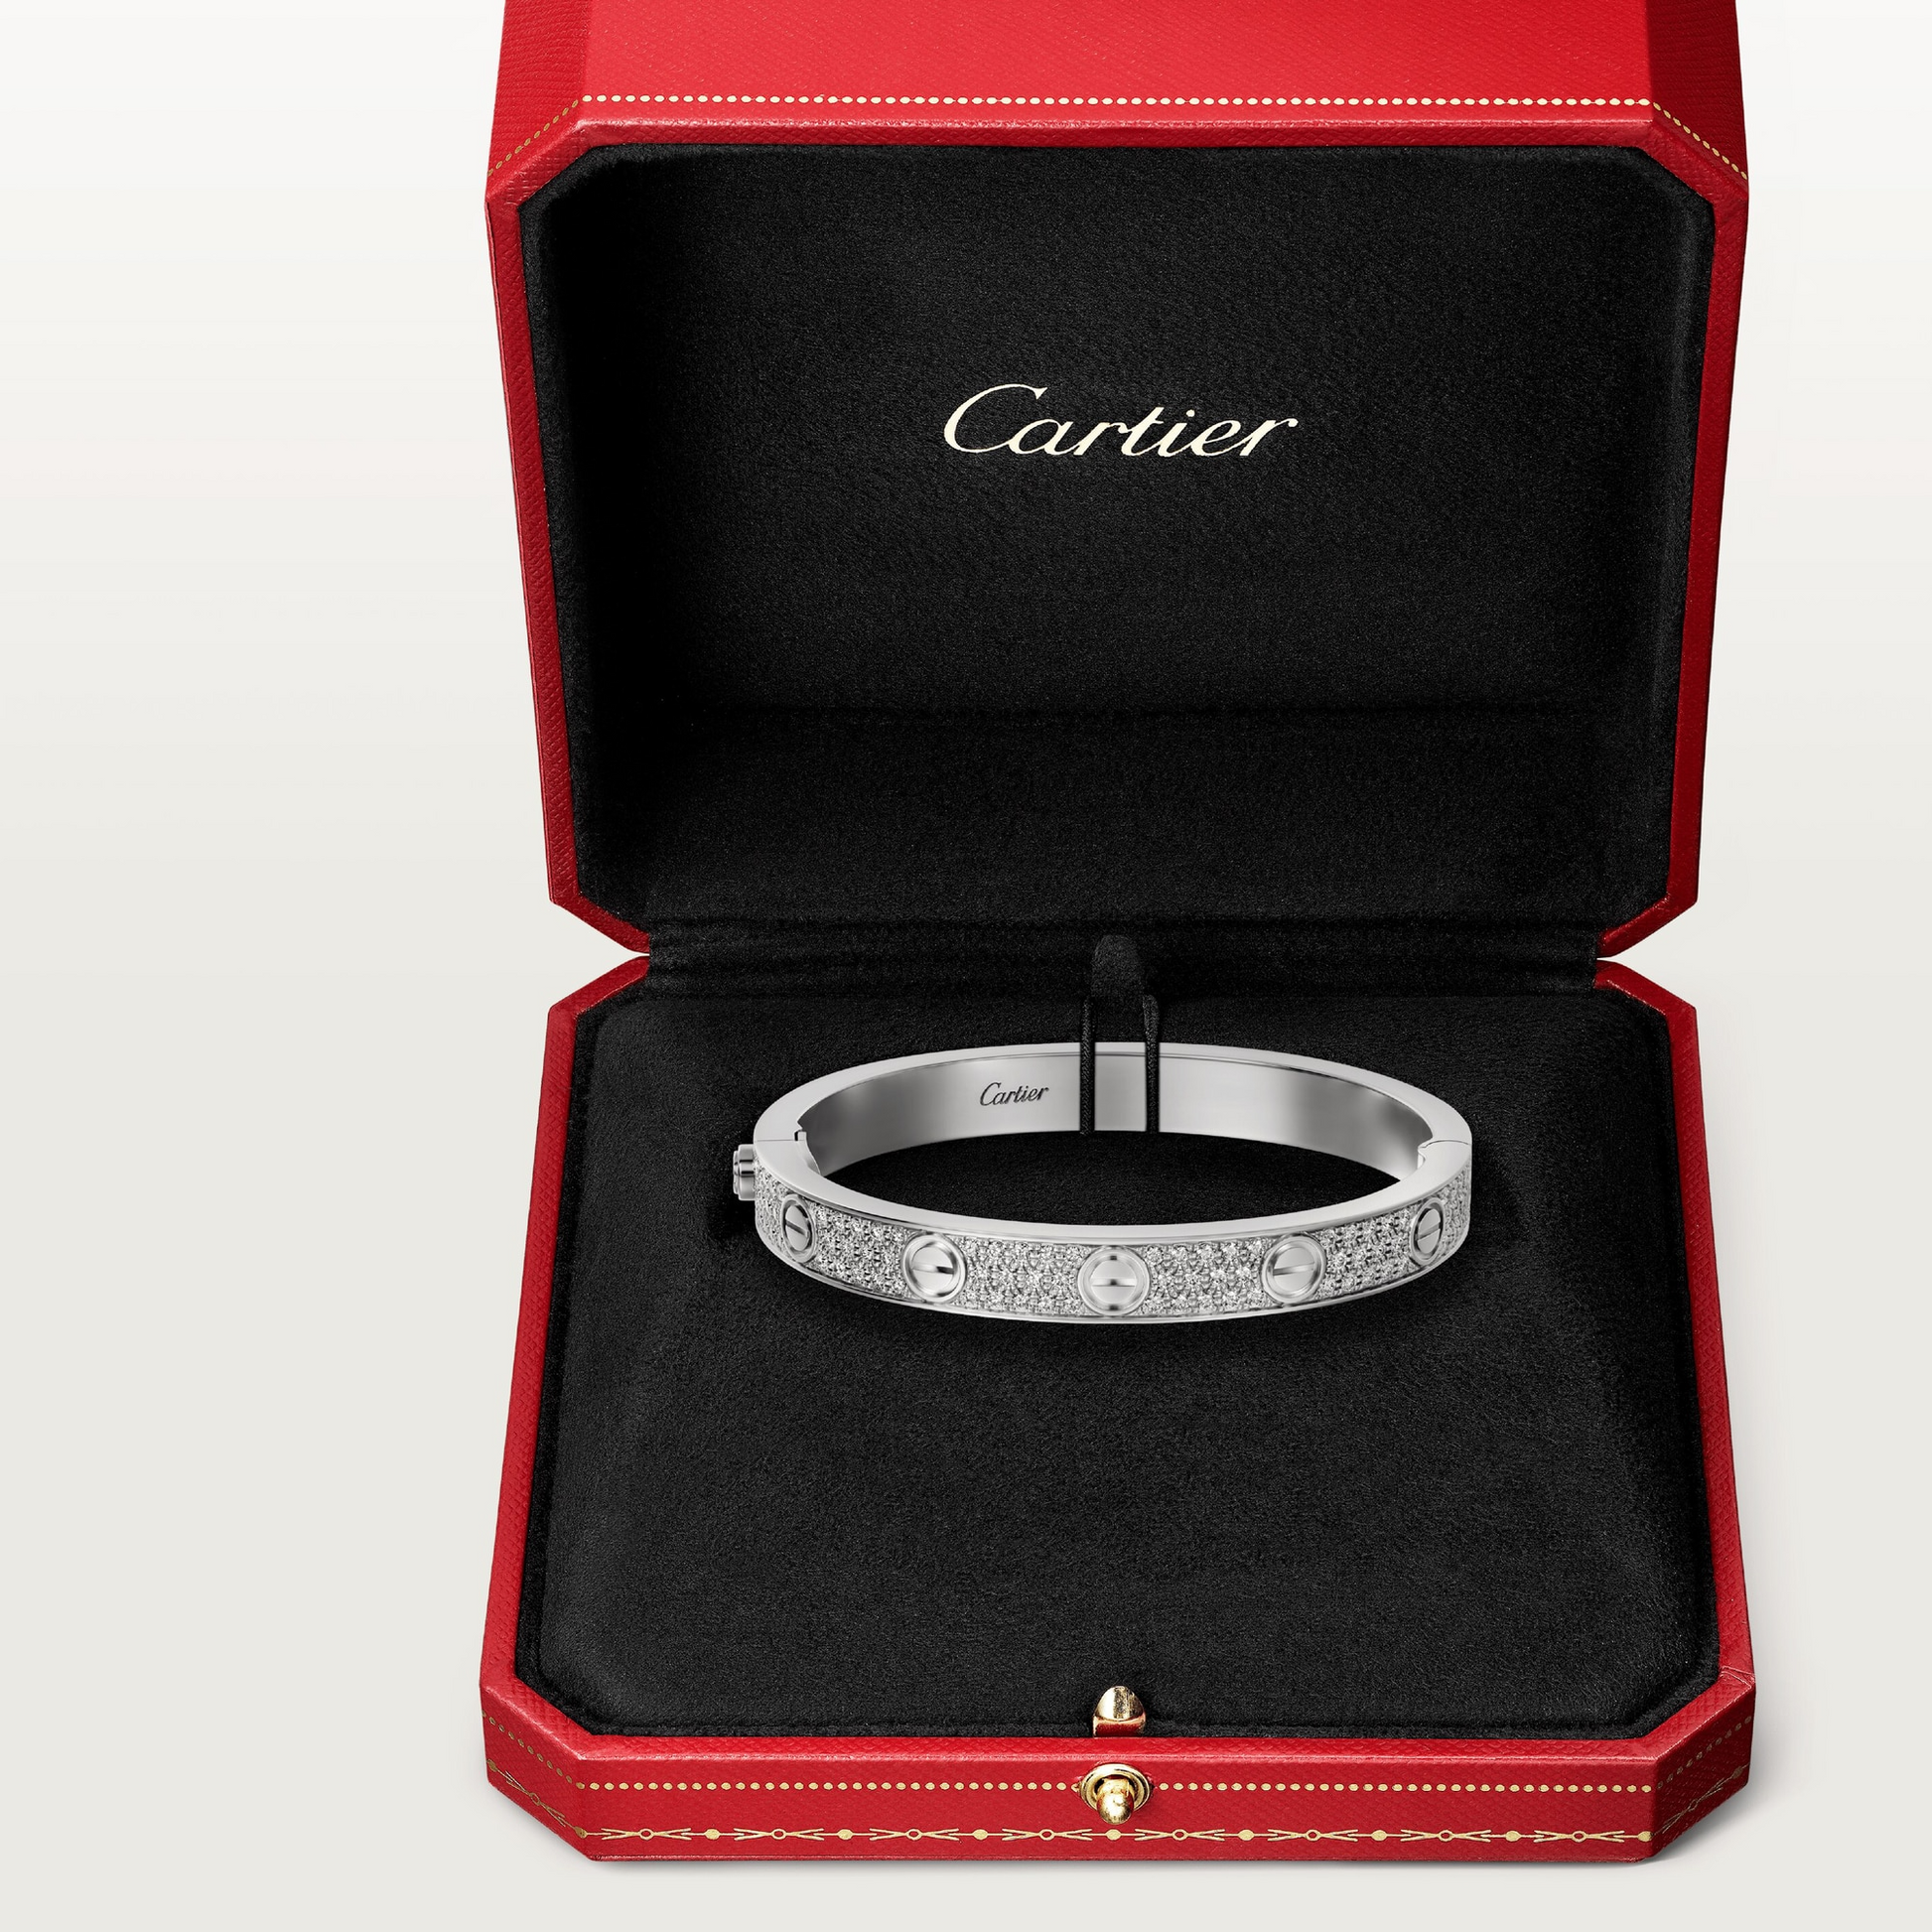 CARTIER Love 18ct pink-gold, diamond and ceramic bracelet